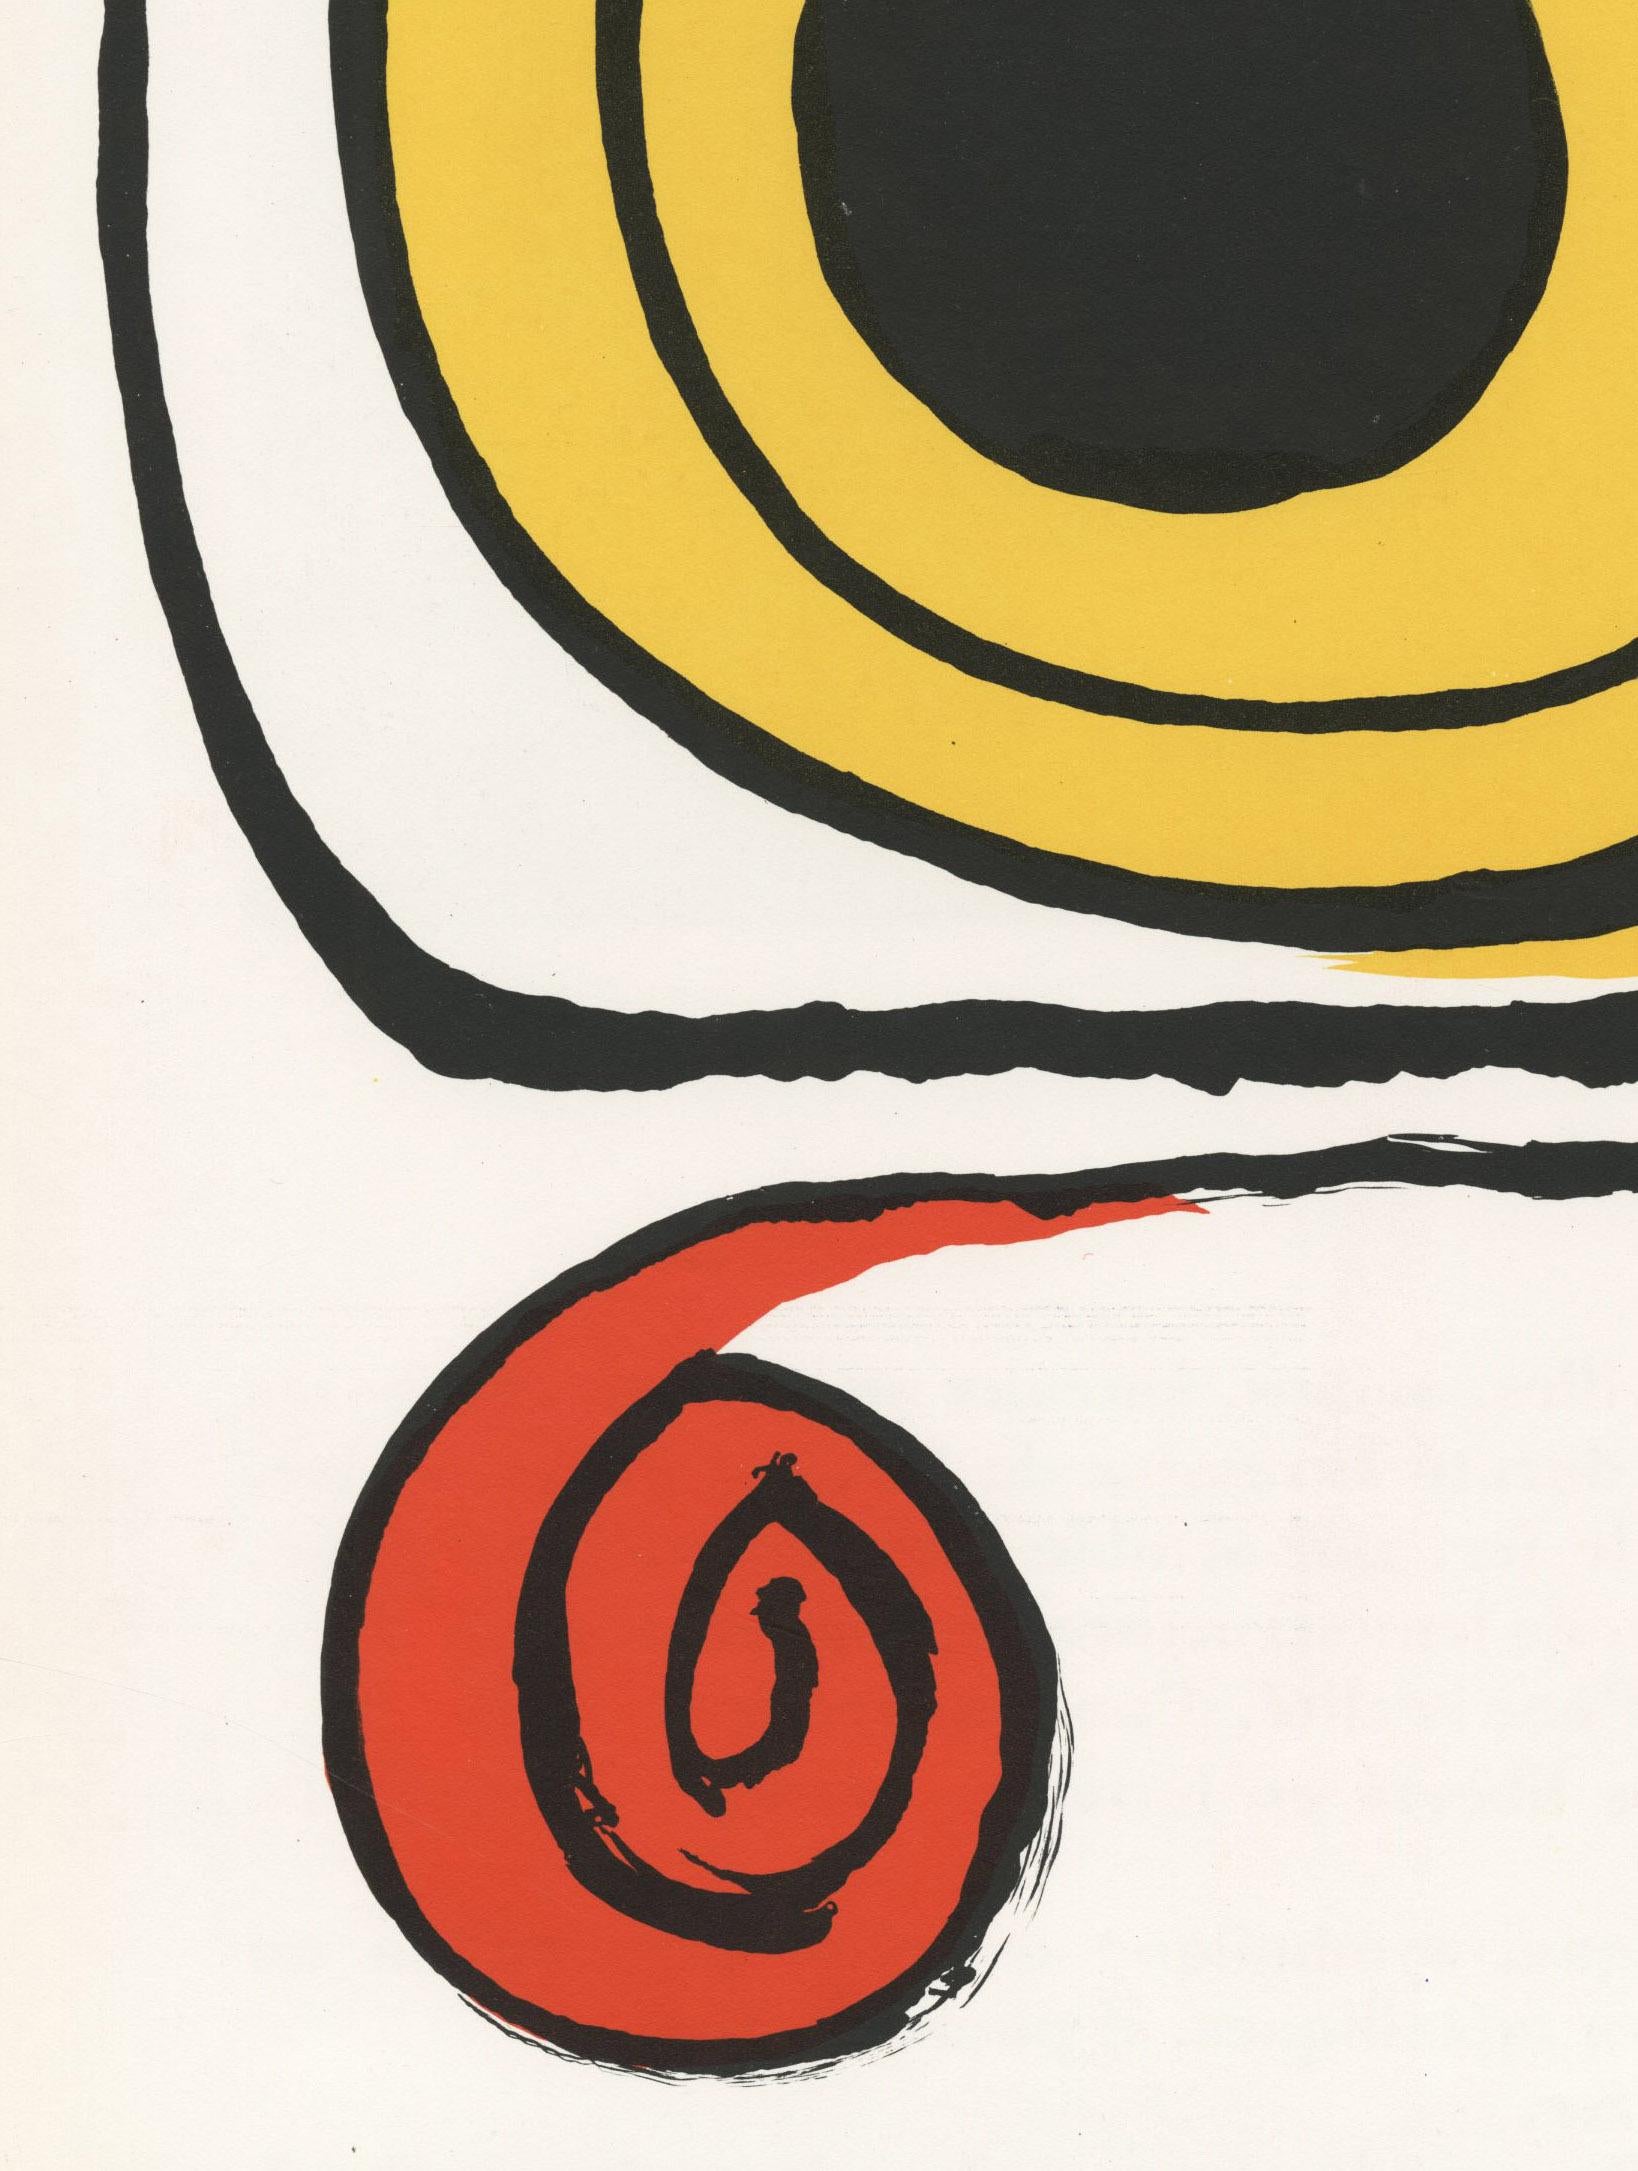 Derriere Le Miroir-No. 190-Page 9
Color llithograph, 1971
Unsigned (as issued)
From: Derriere Le Miroir, No. 190, 1971
Publisher: Aime Maeght, Paris
Printer: L’Imprimerie Arts, Paris
Edition: Large (unspecified)
Note: There was also a deluxe edition